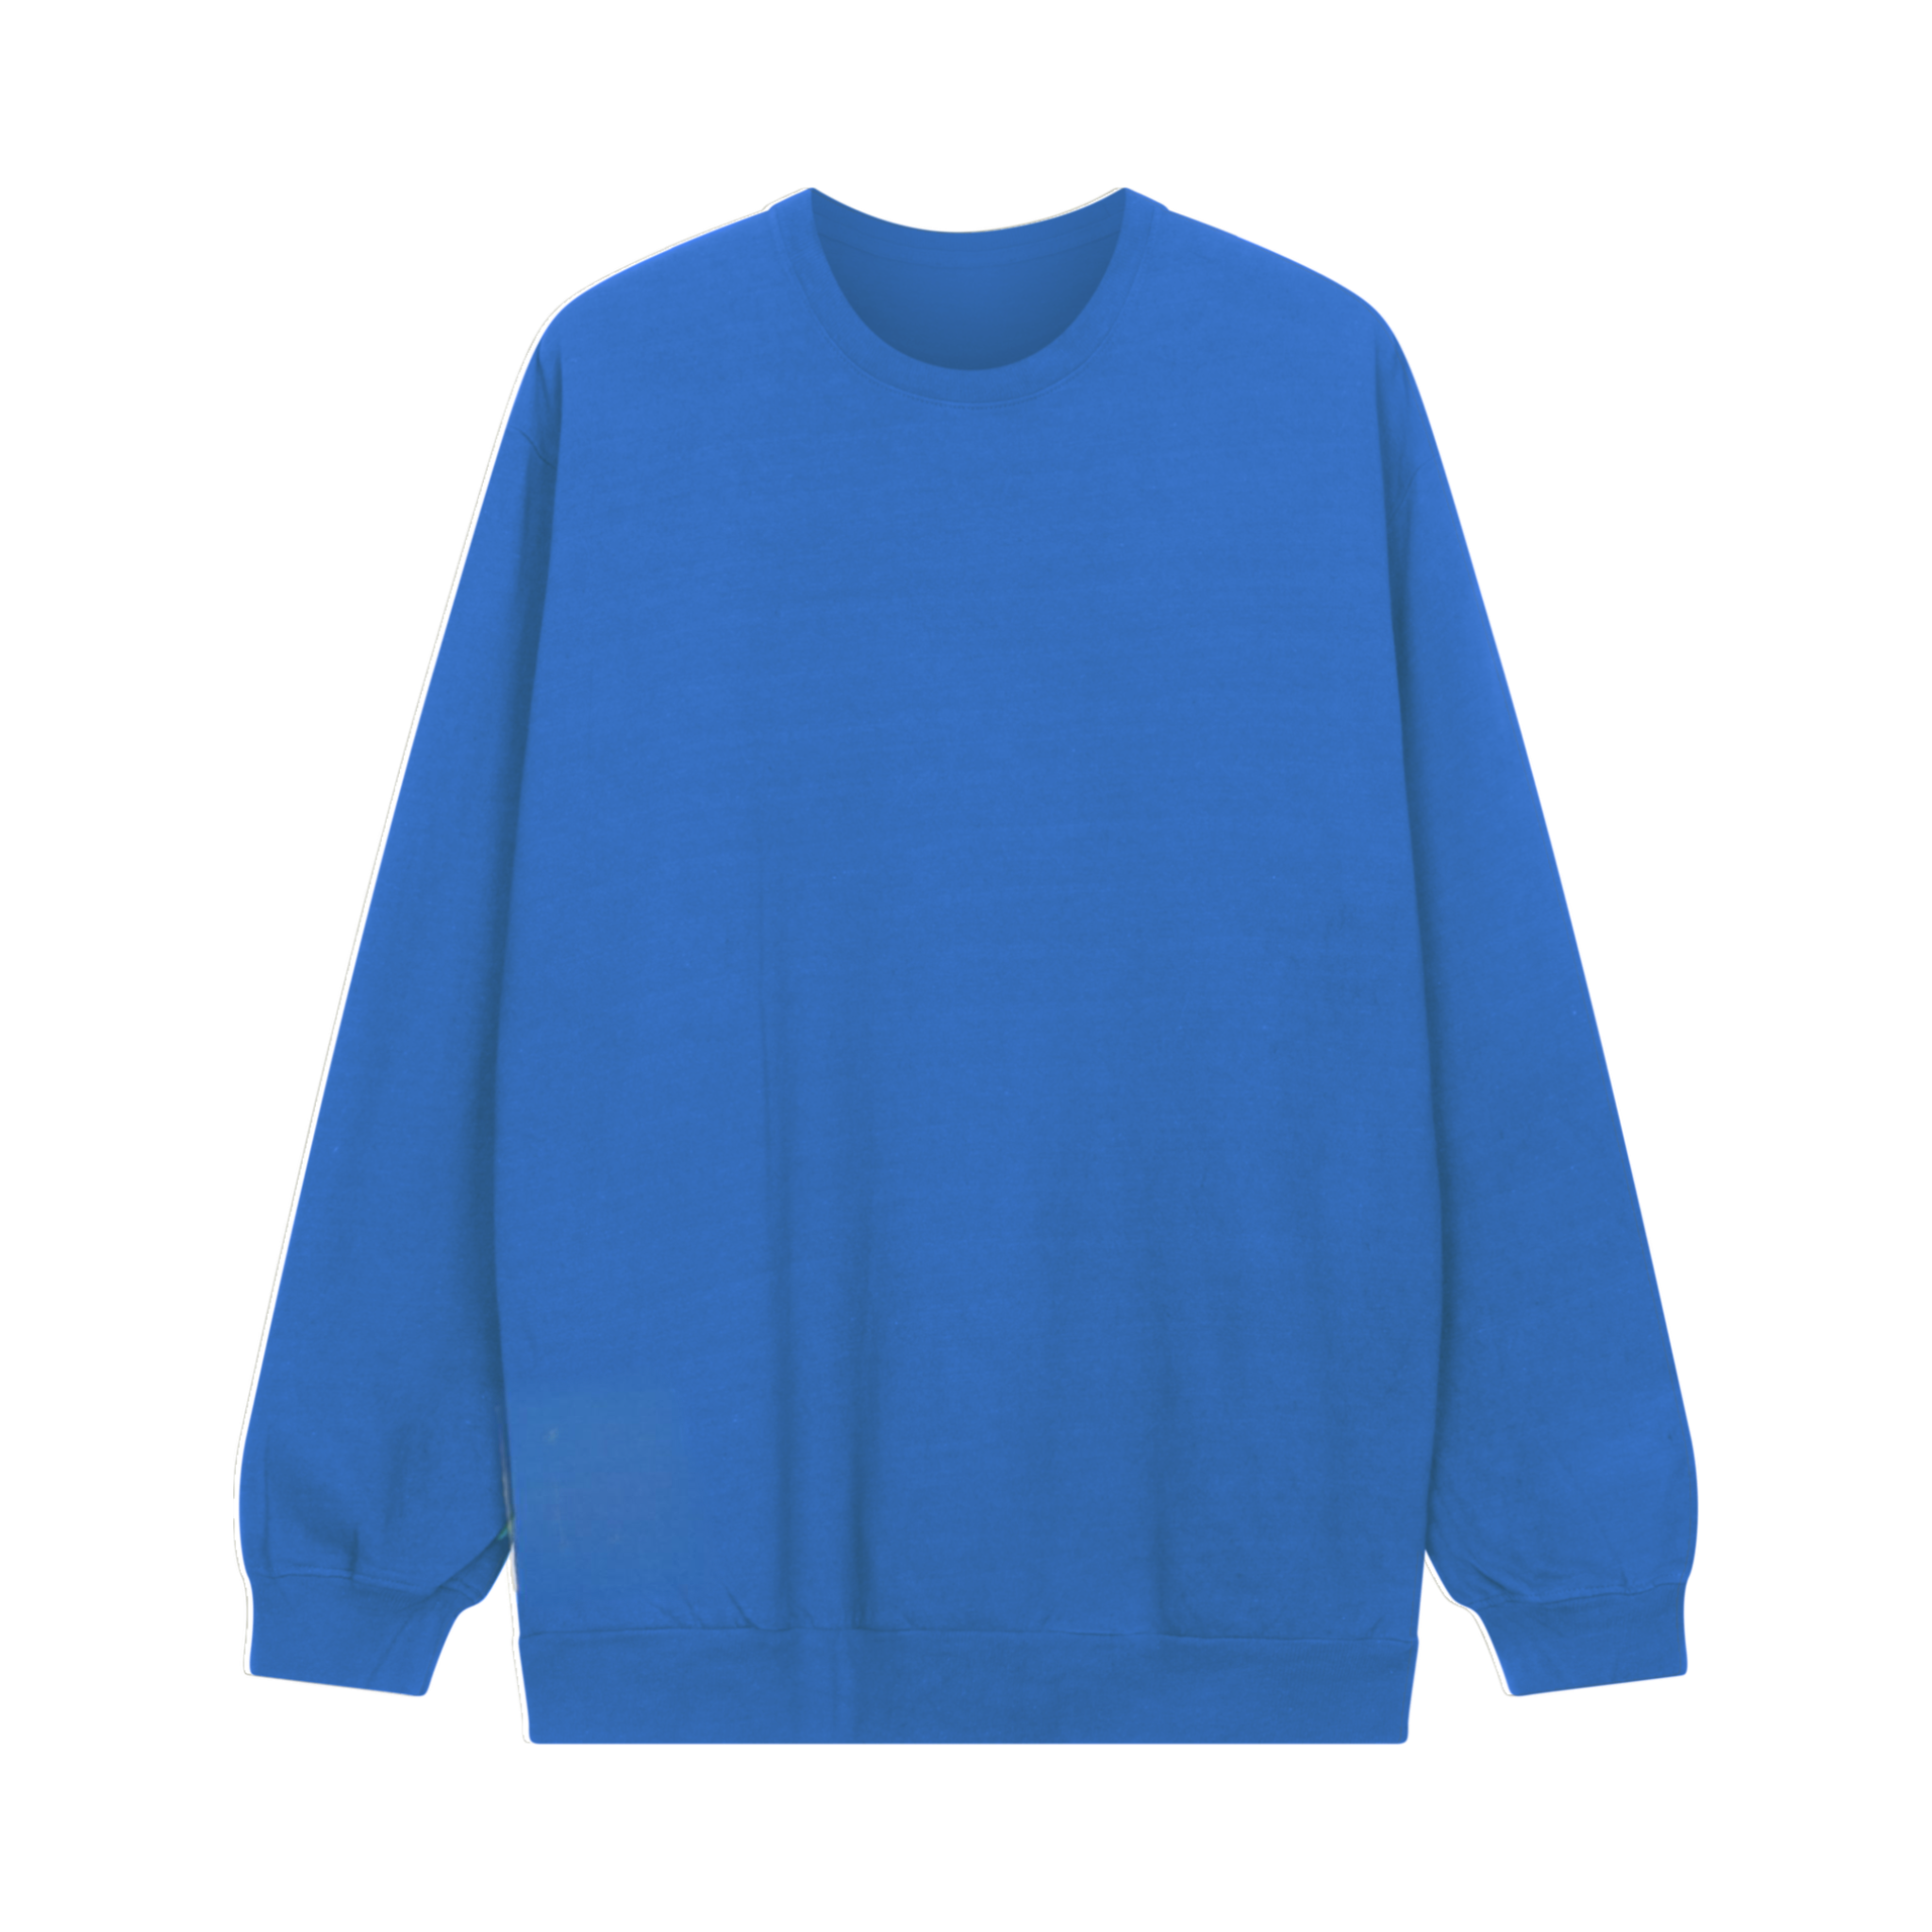 100% Recycled Cotton Lightweight Sweatshirt